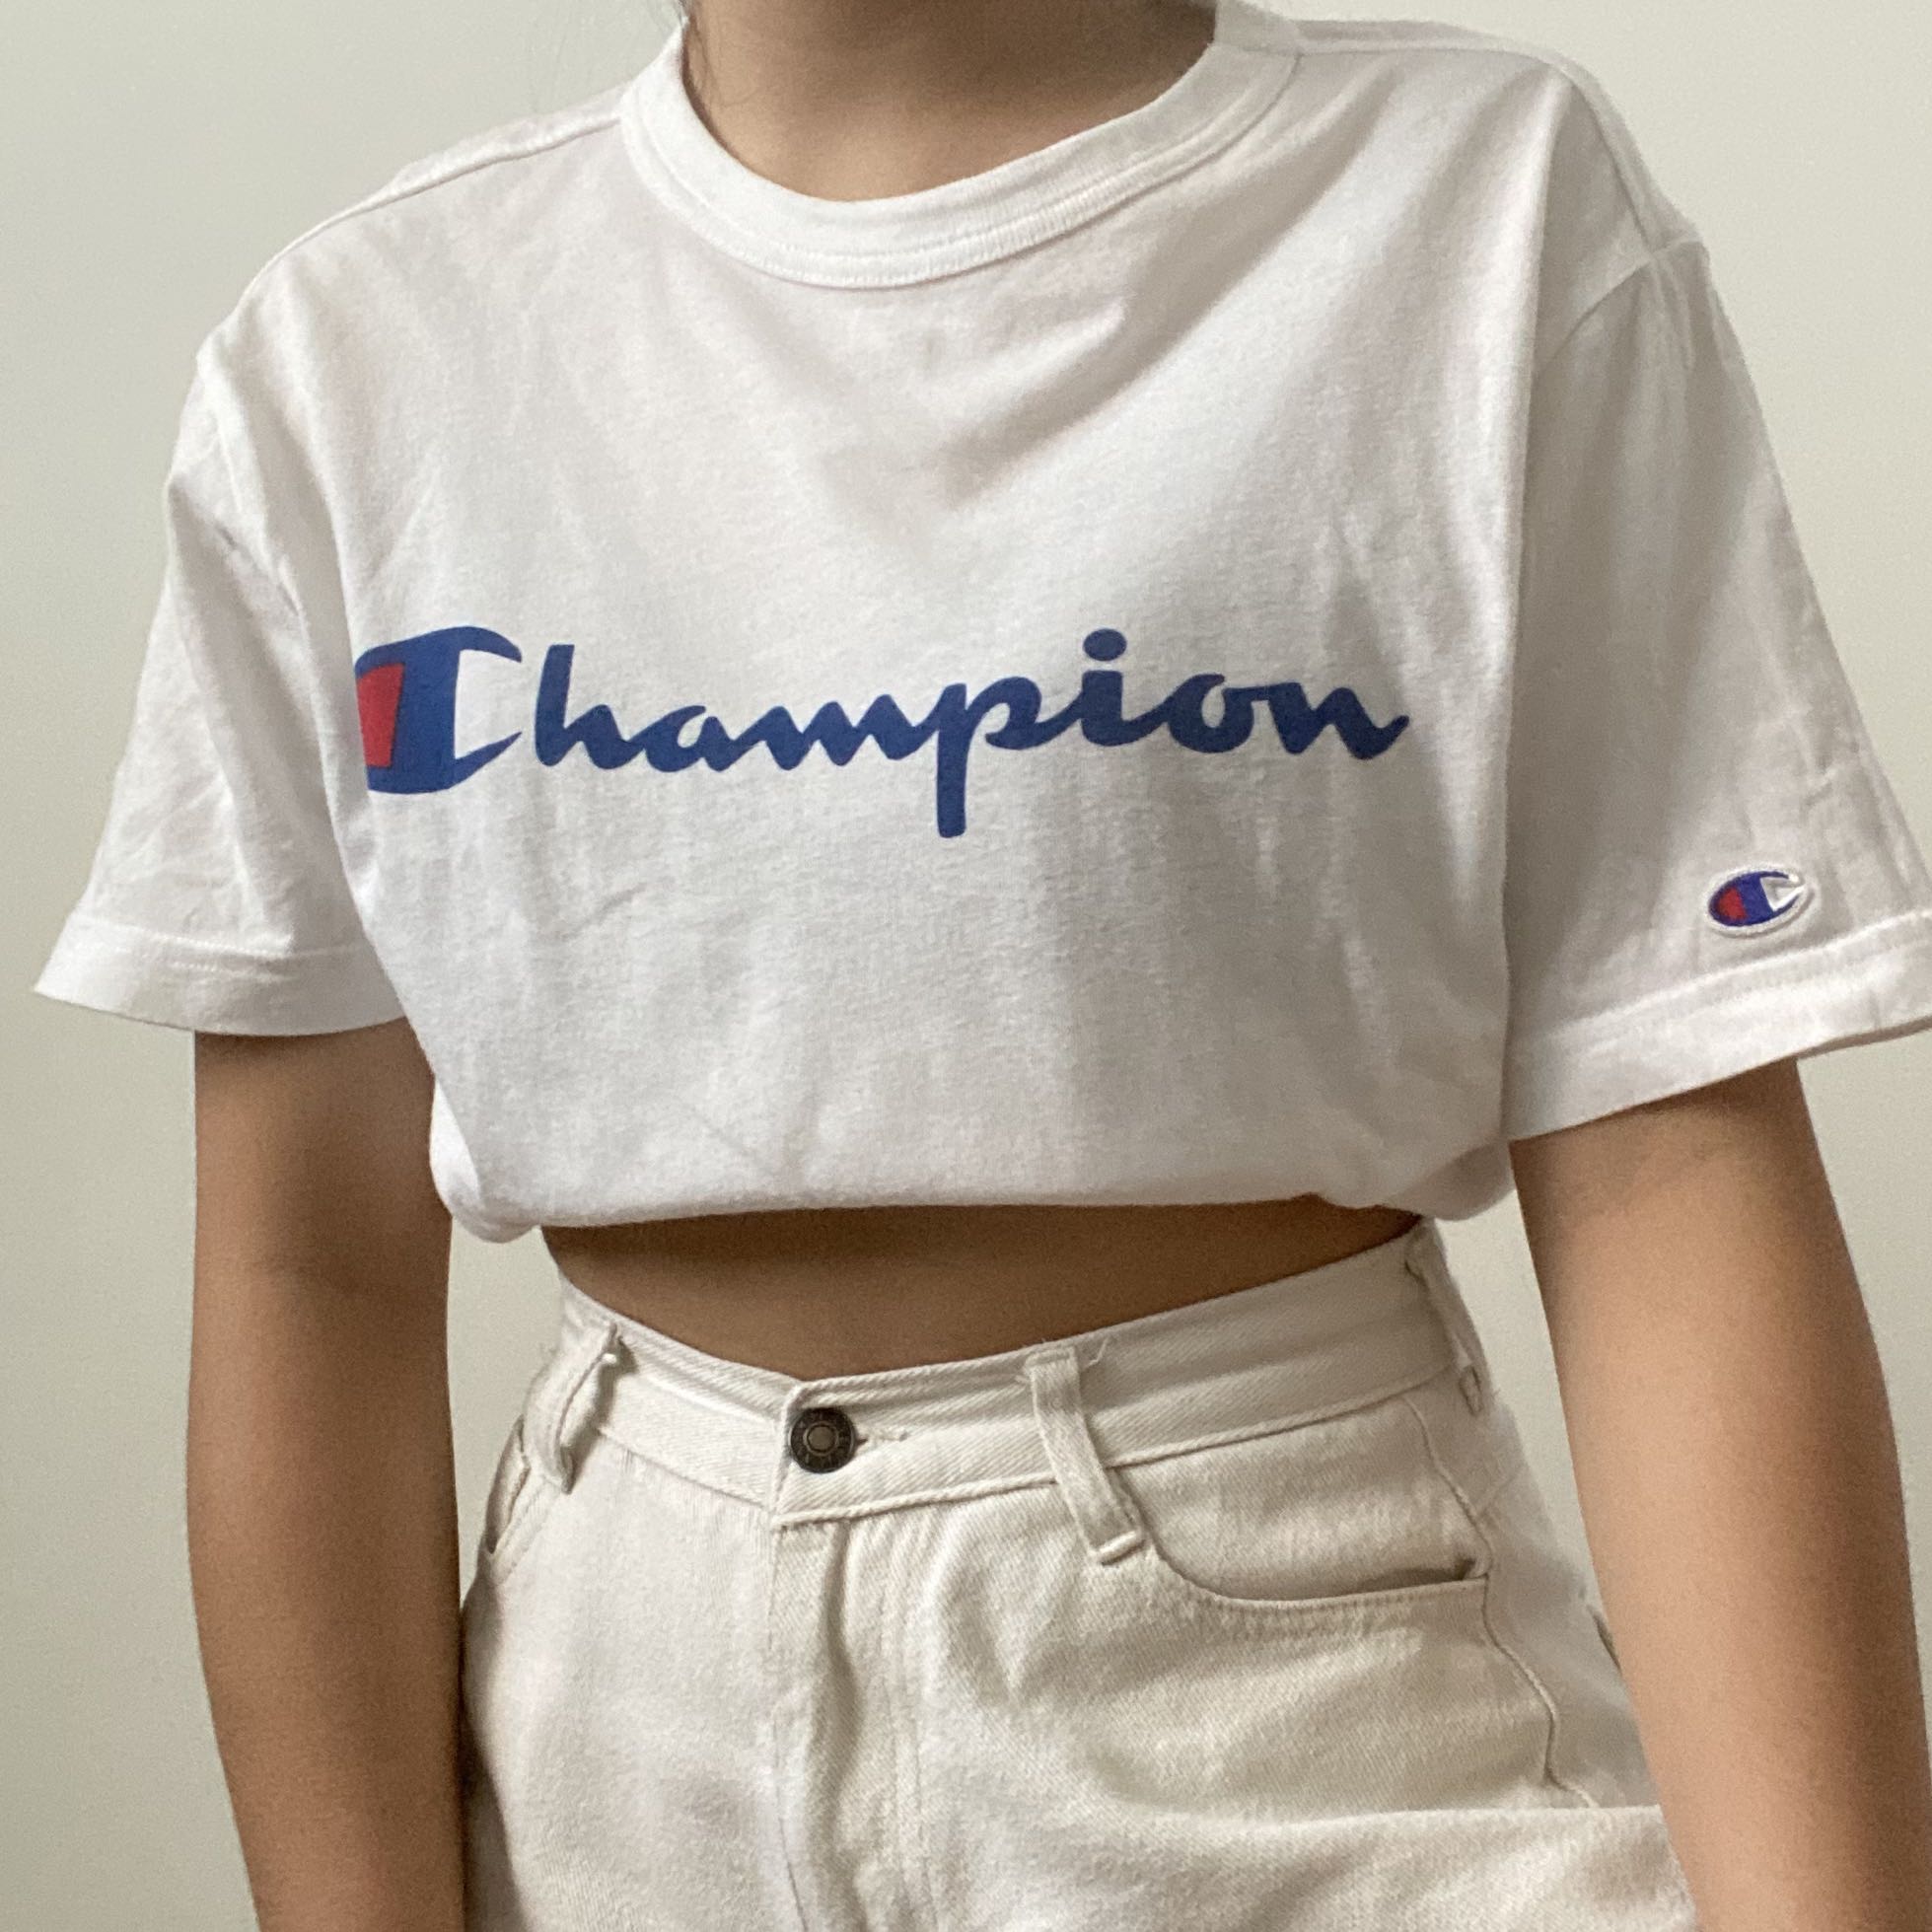 authentic champion shirt